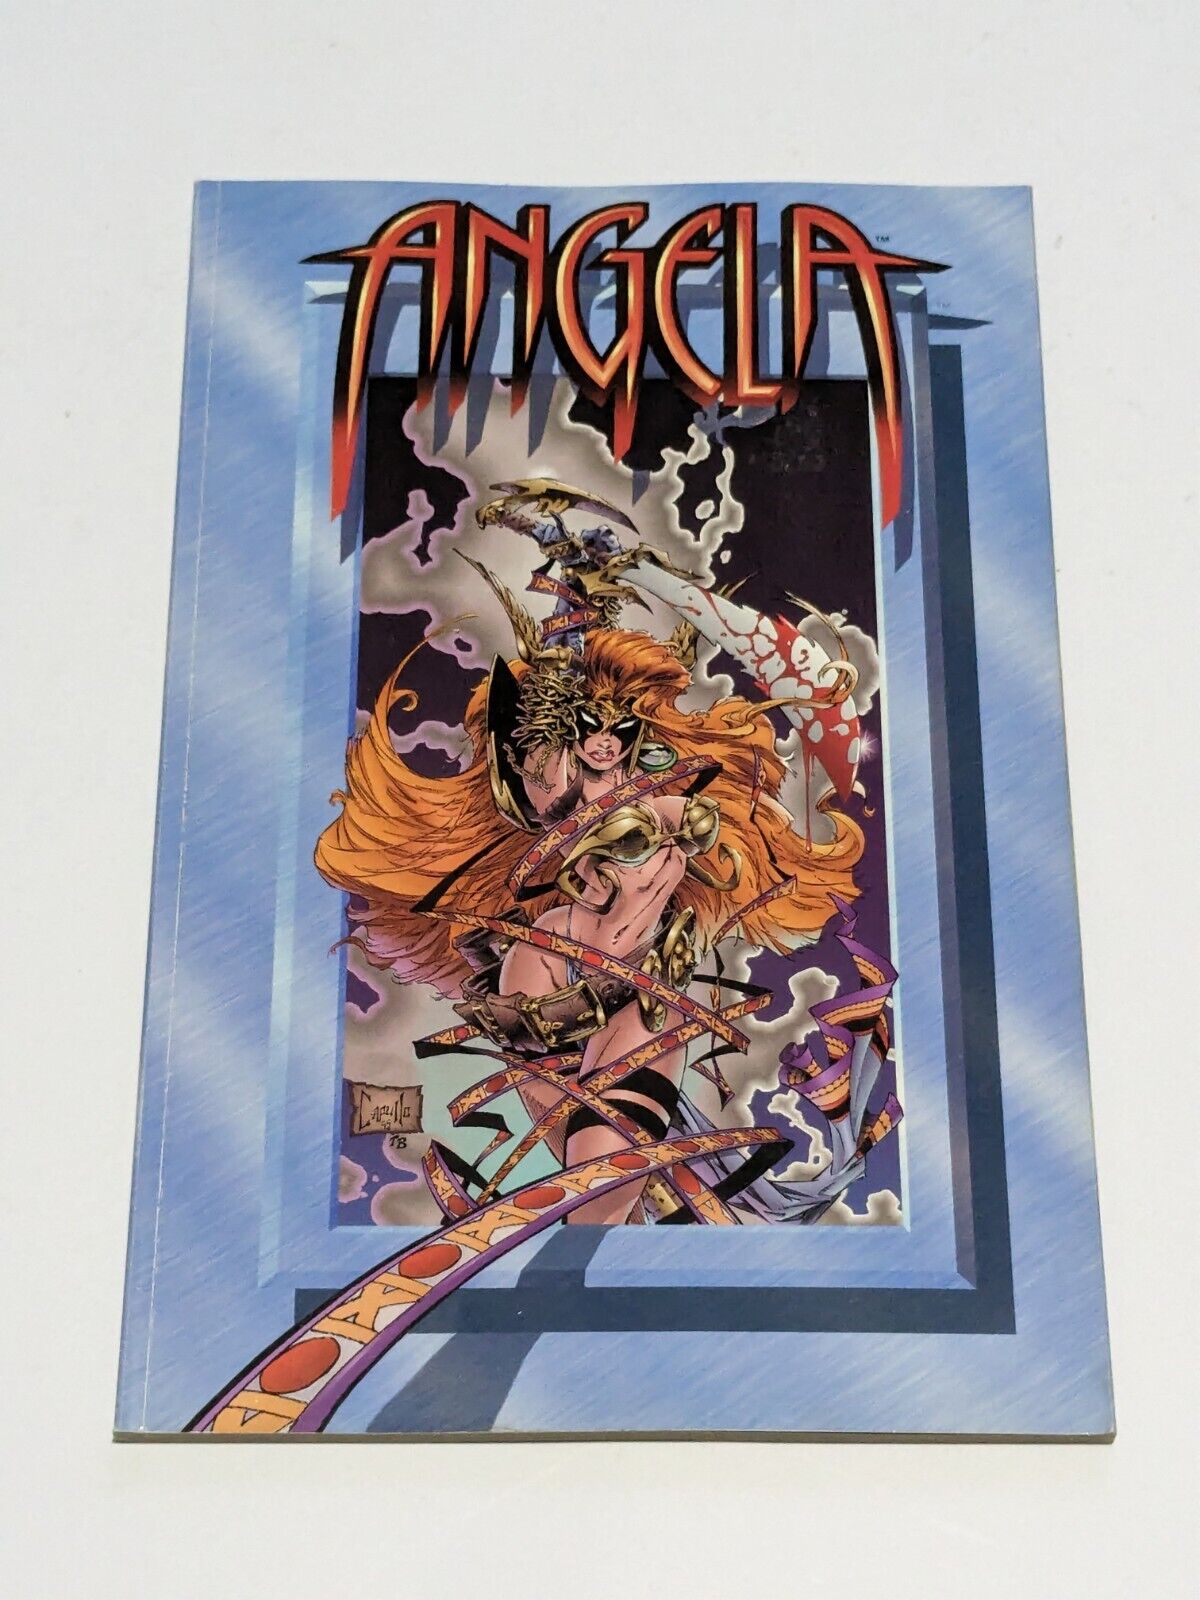 ANGELA VOLUME #1 1994/95 IMAGE TPB TODD MCFARLANE NEIL GAIMAN GREG CAPULLO SPAWN